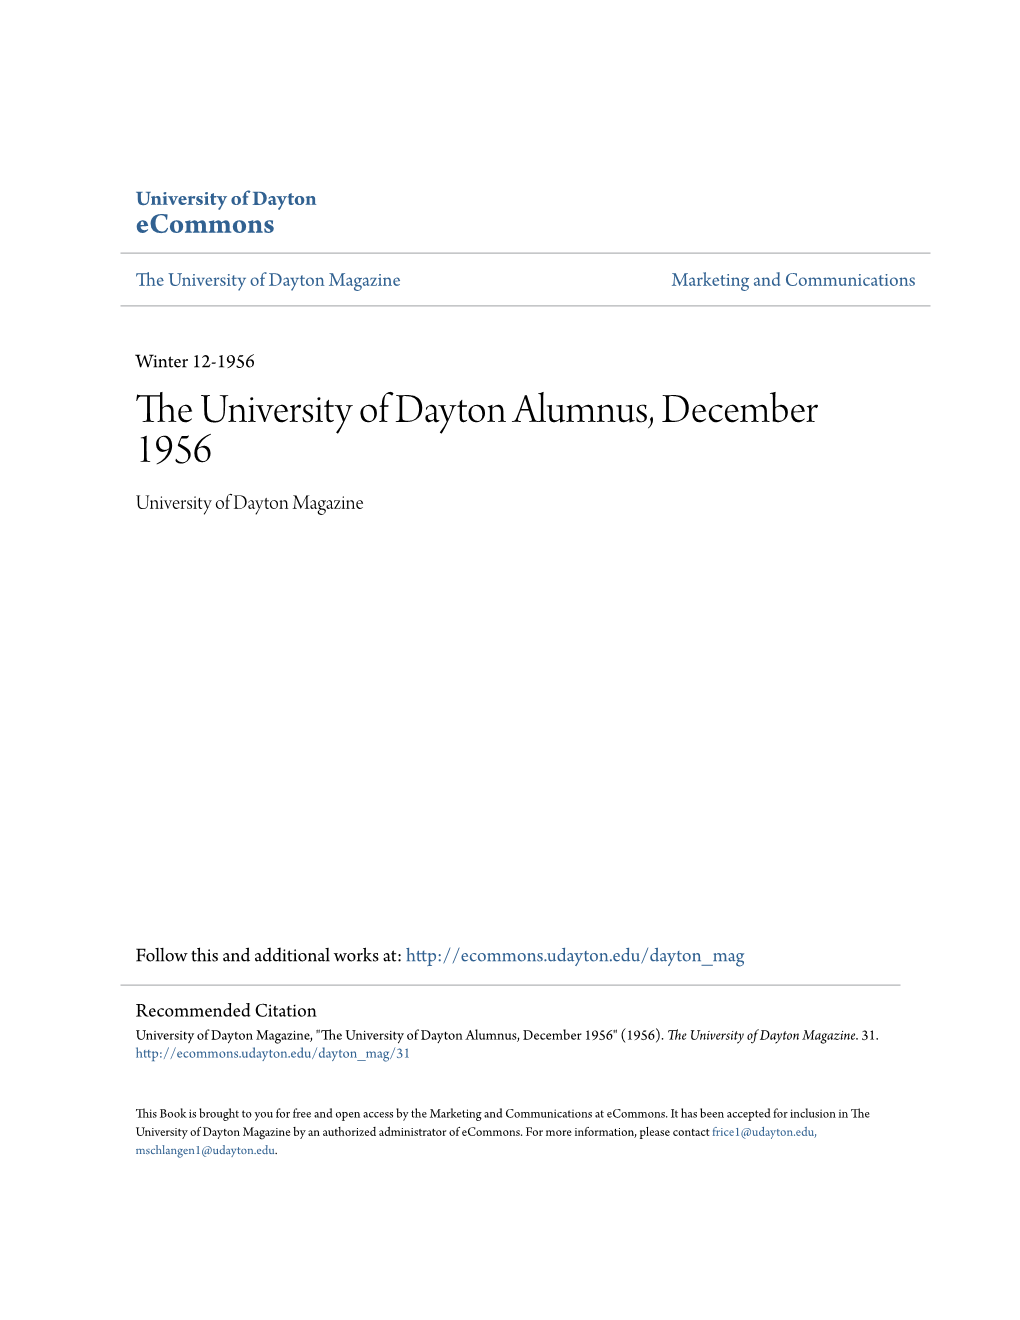 The University of Dayton Alumnus, December 1956